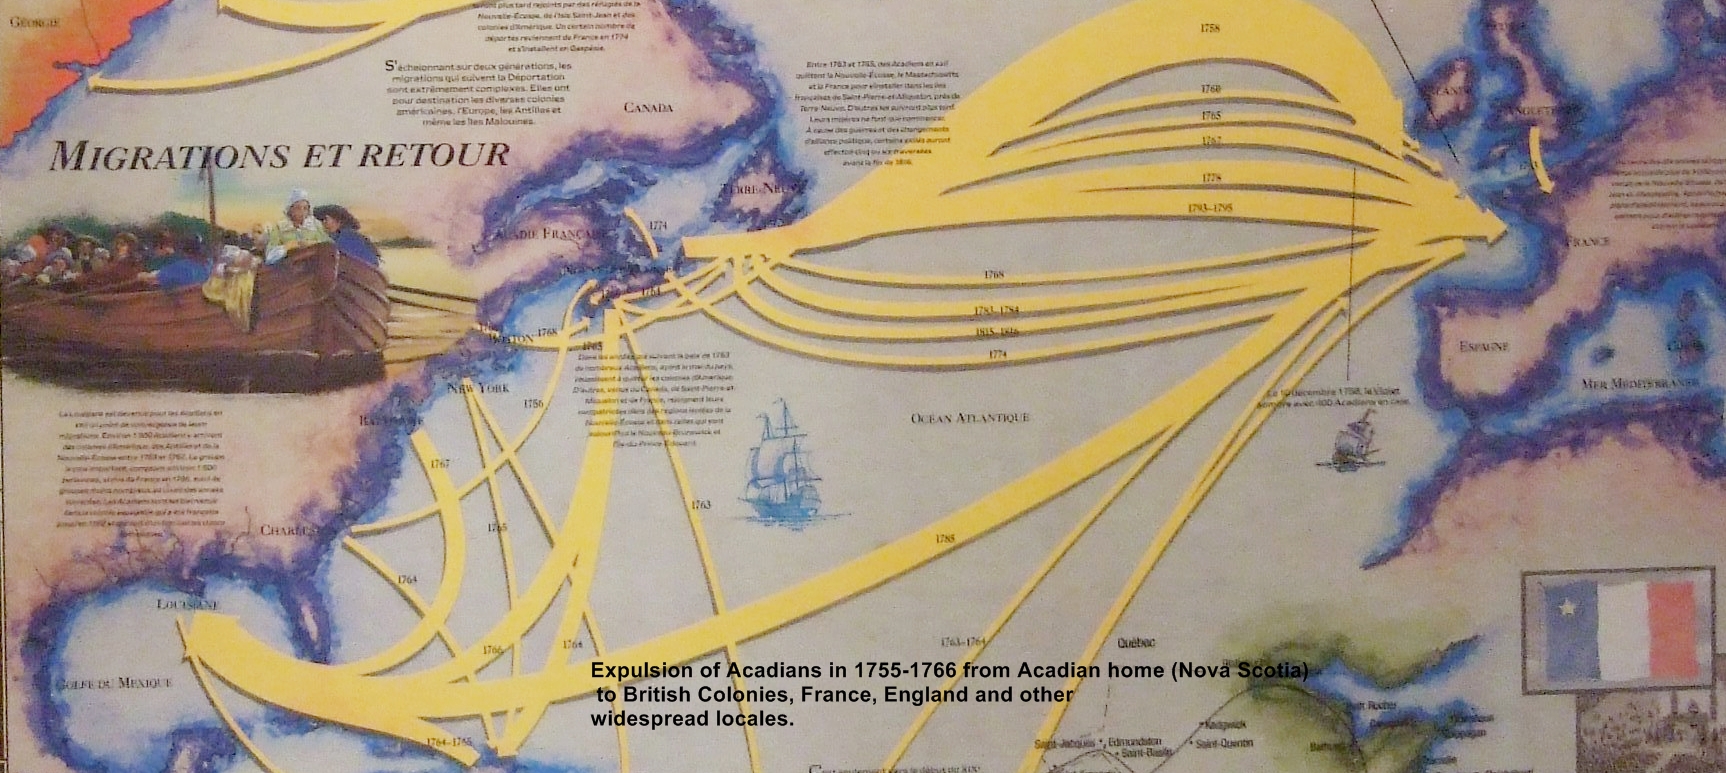 Diagram of Acadian expulsion from Acadia (Nova Scotia)